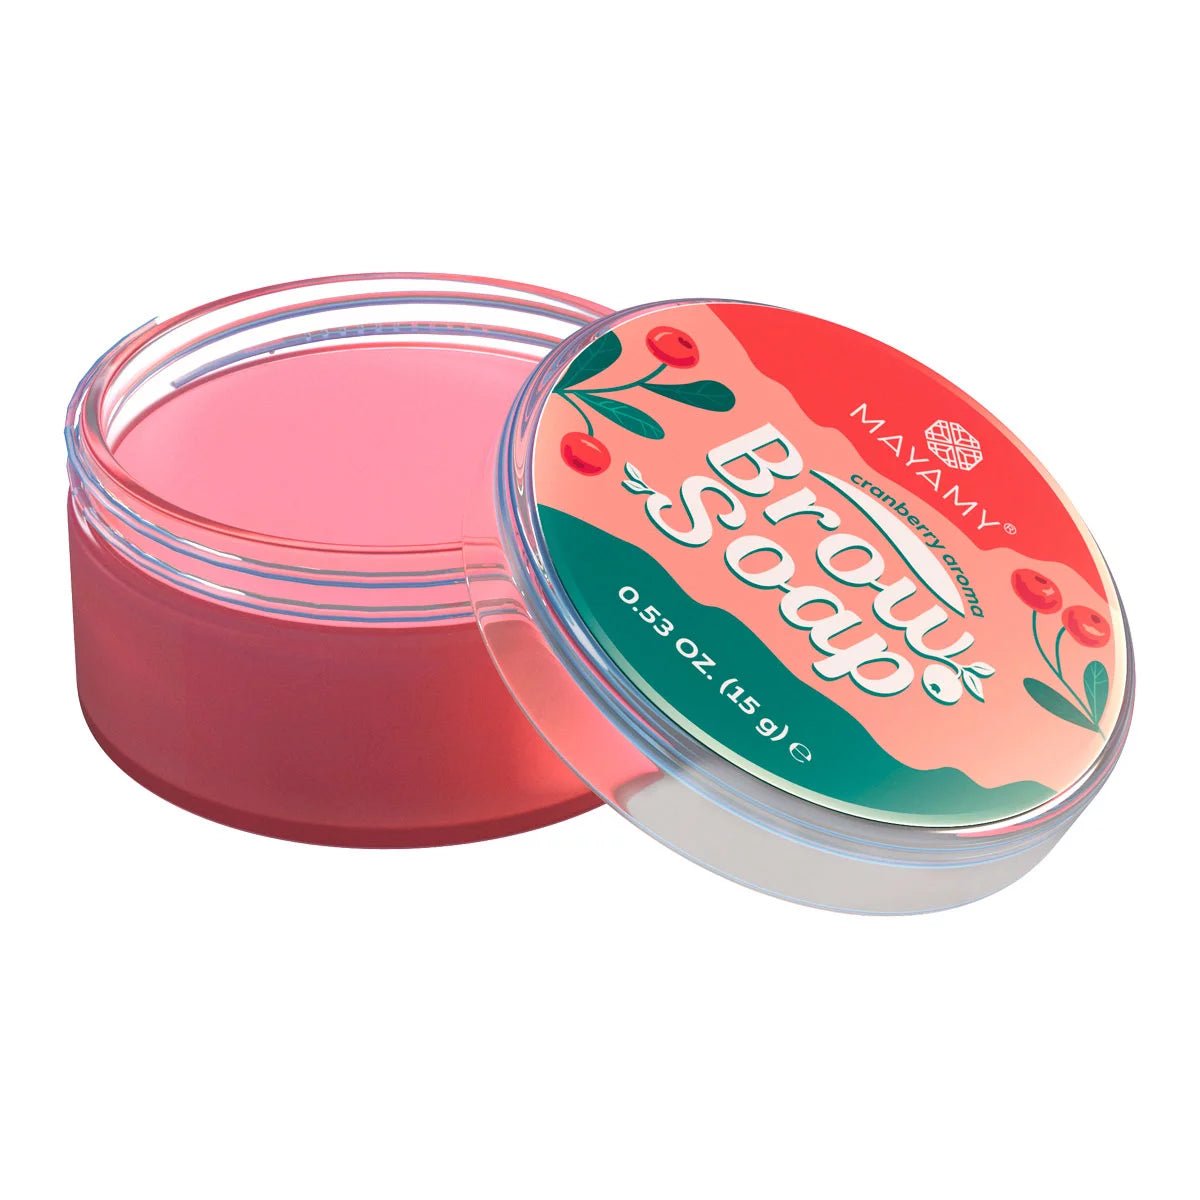 MAYAMY - BROW SOAP - Luna Beauty Supplies